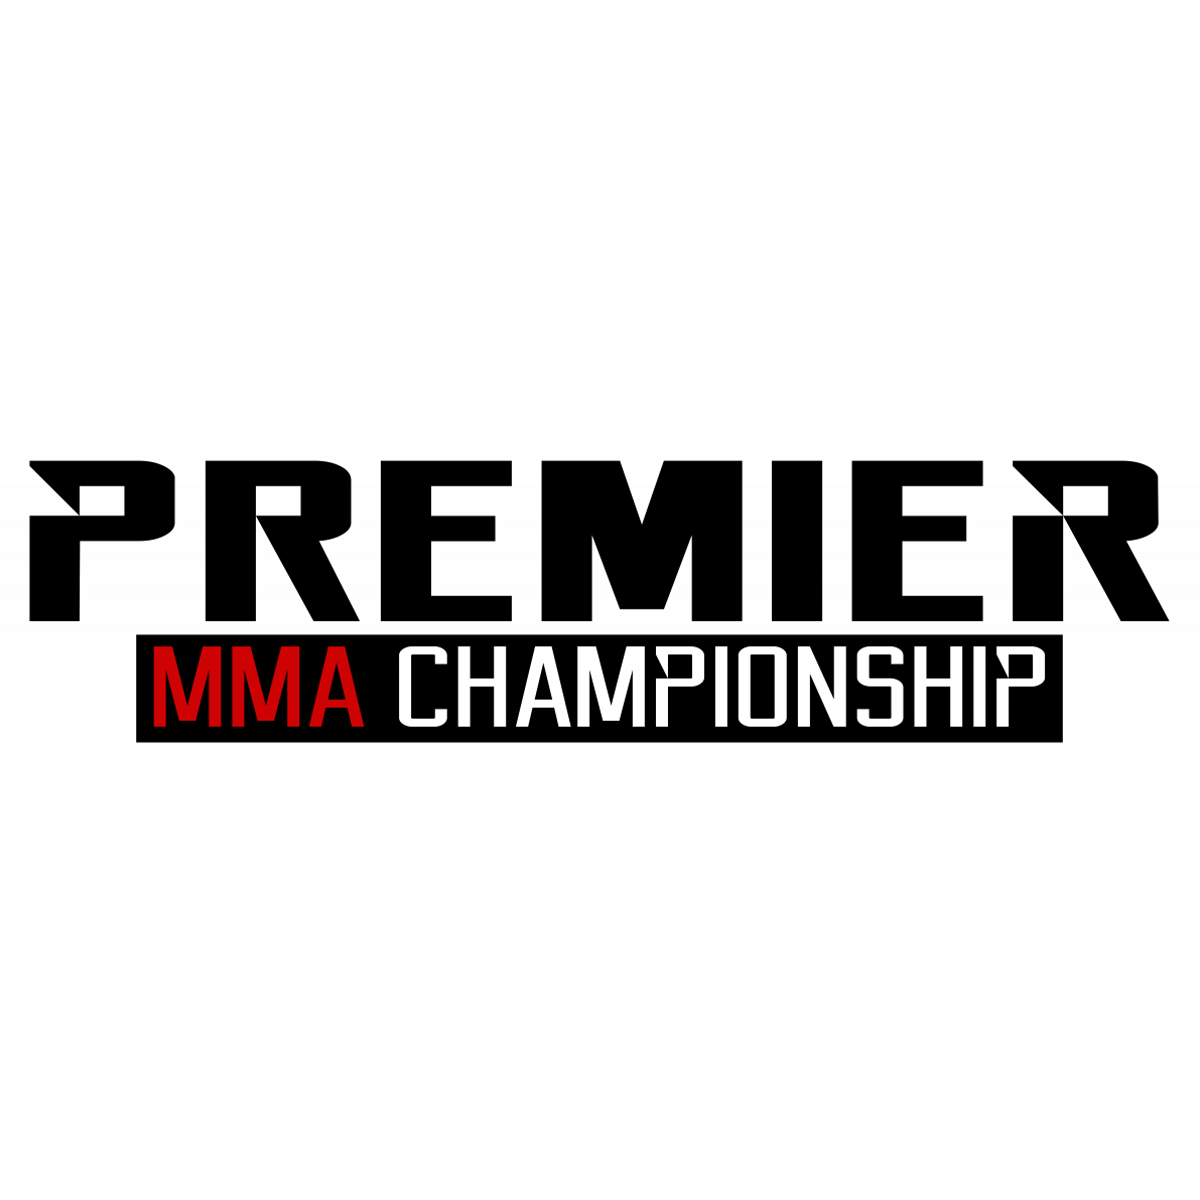 Premier MMA Championship